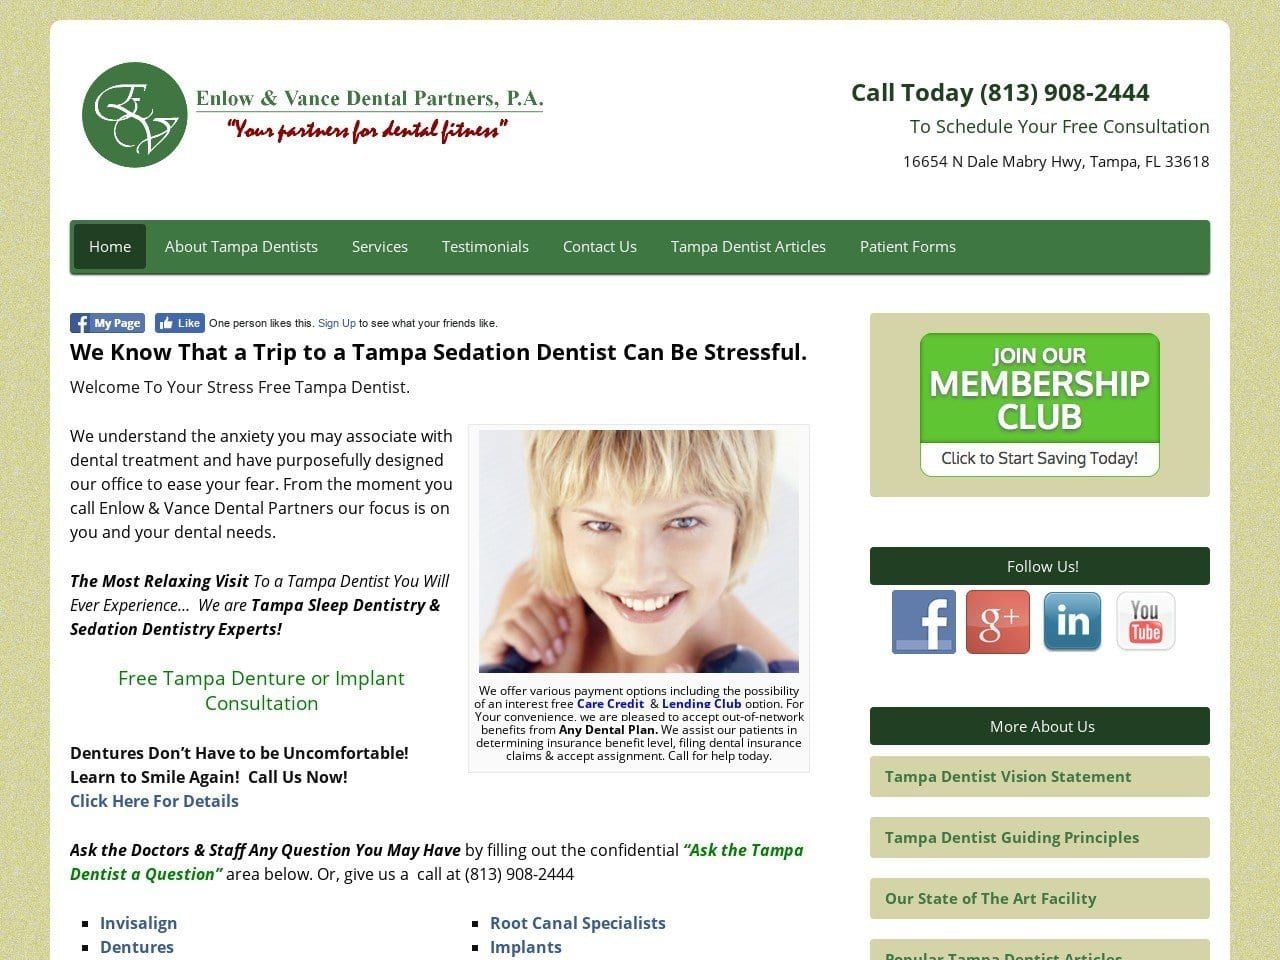 Enlow and Vance Dental Partners Website Screenshot from yourdentalfitness.com